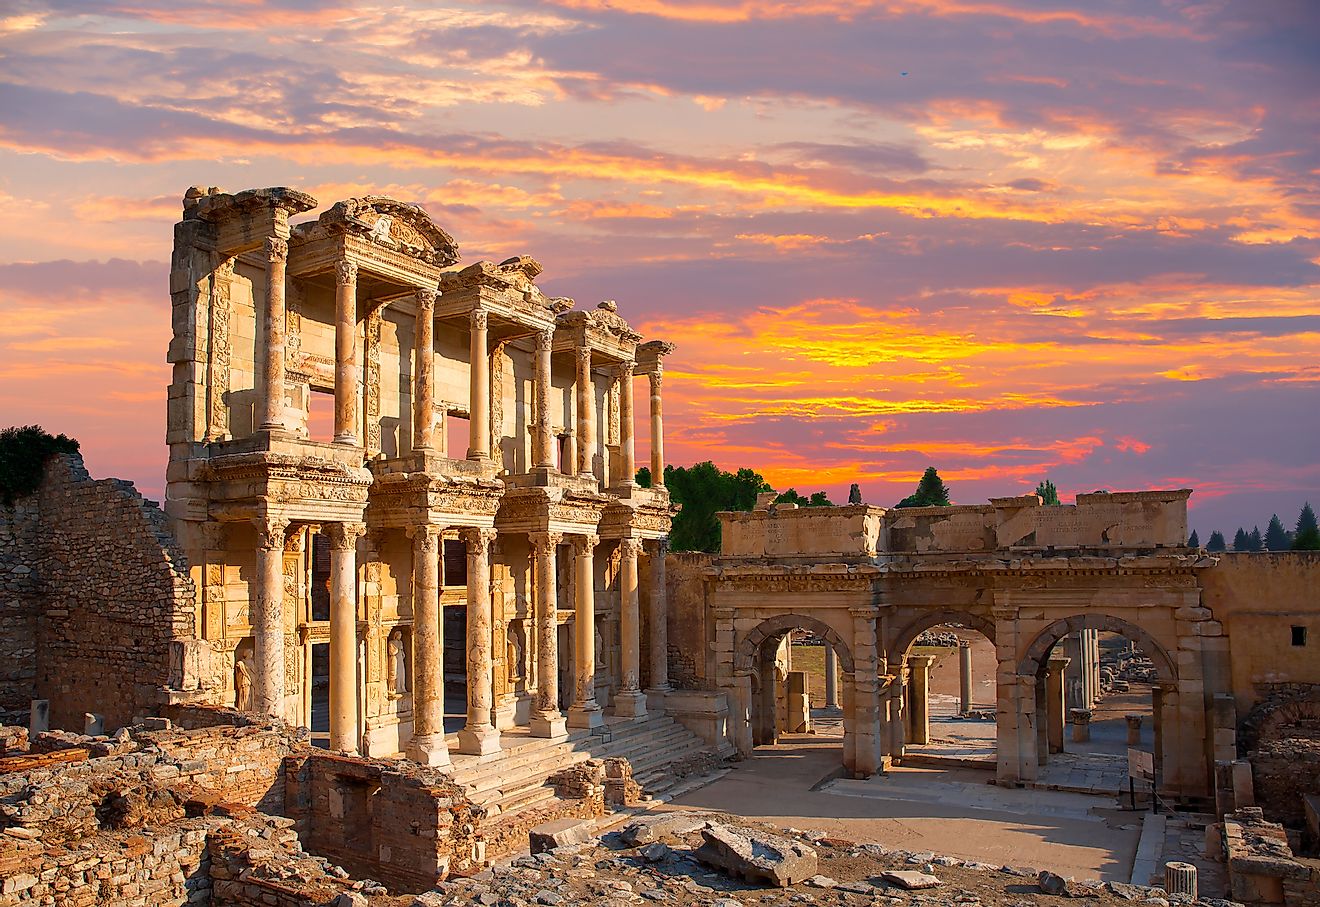 Celsus Library in Ephesus, Turkey. Image credit: Muratart/Shutterstock.com